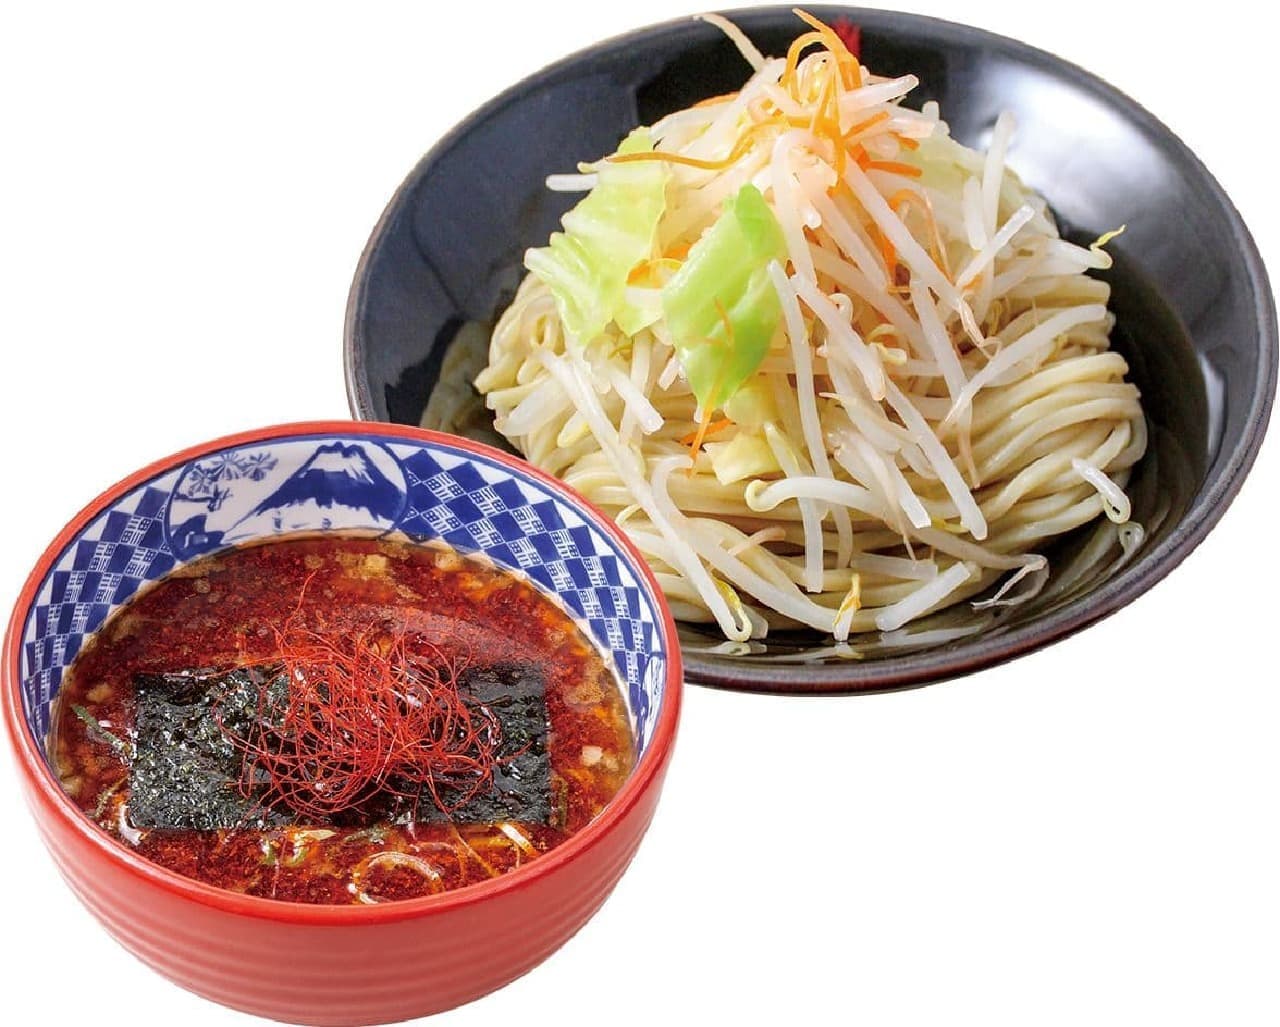 Mita Noodle Factory "rich seafood" red "miso tsukemen"